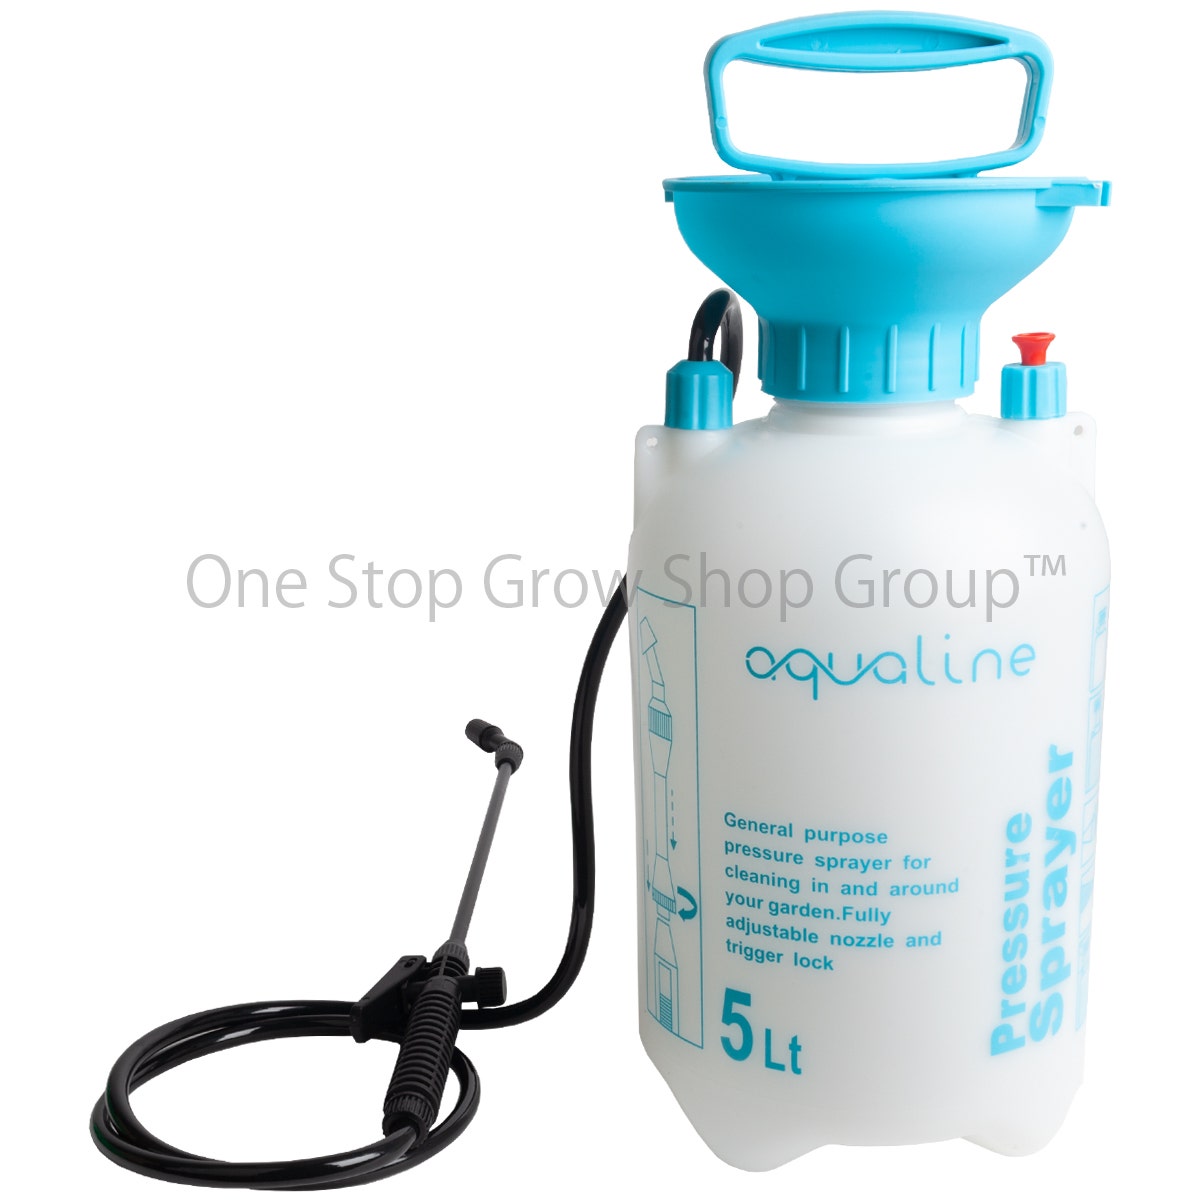 Aqualine Pressure Sprayer